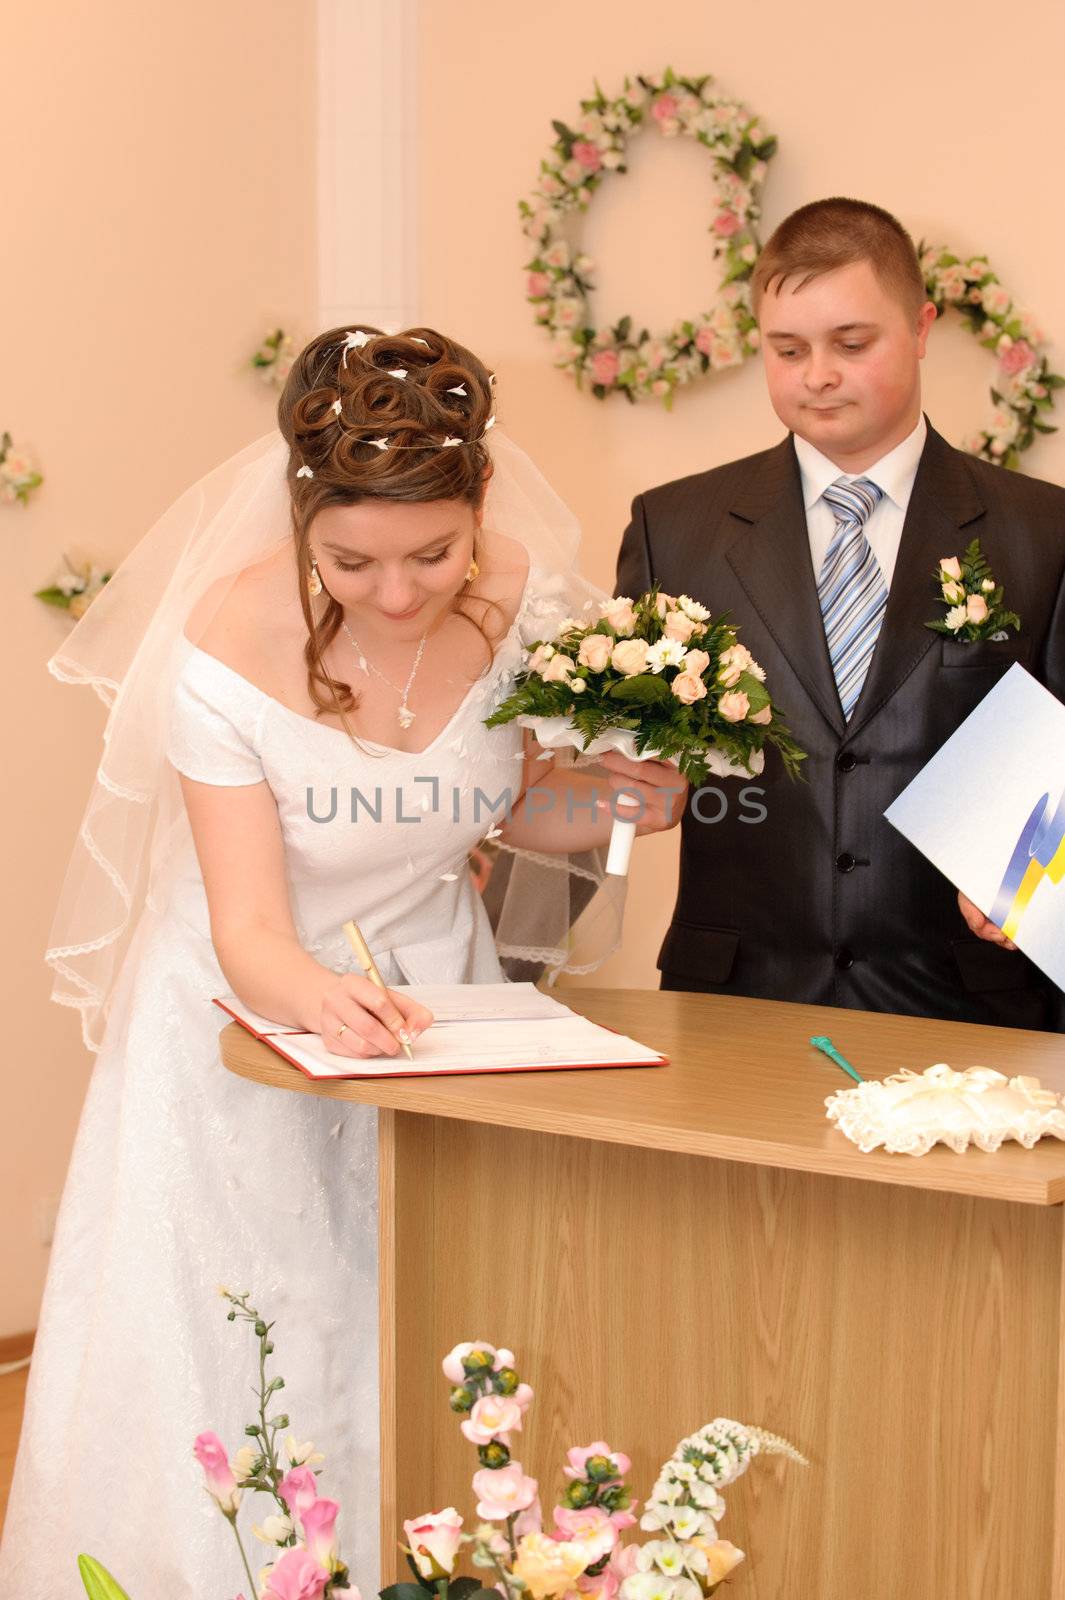 The wedding signature. Ceremony of wedding, a fastening the signature